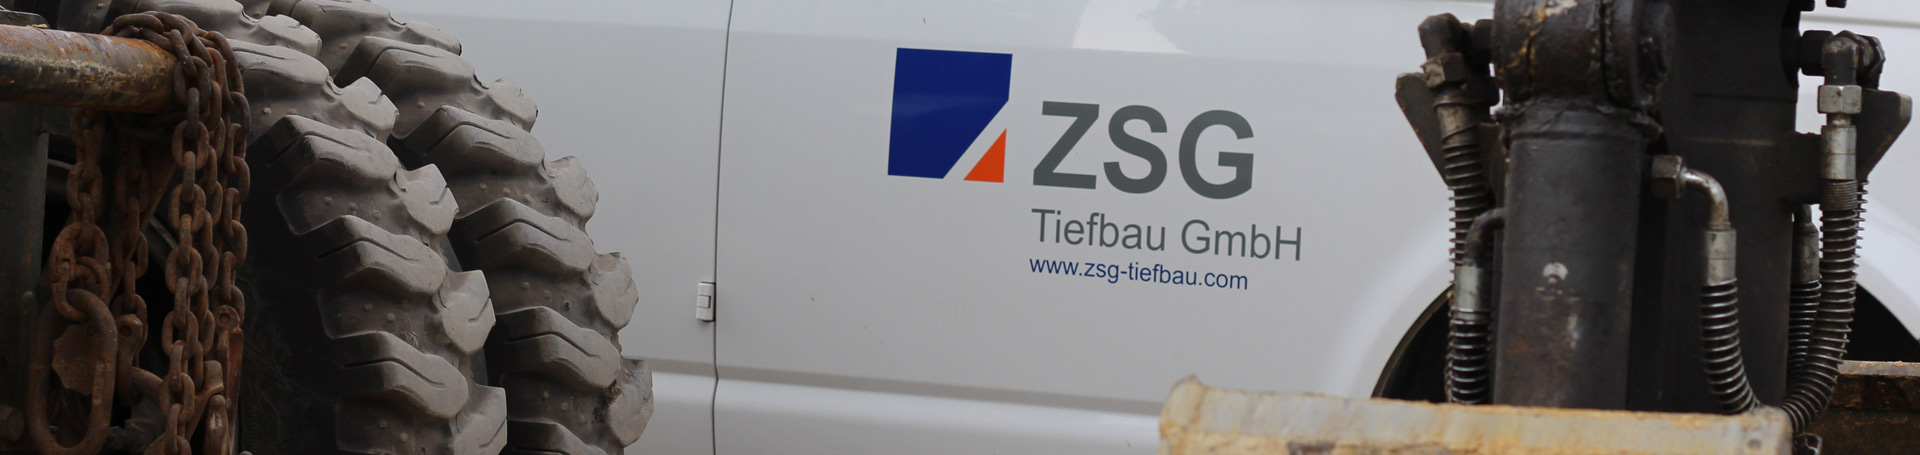 ZSG Tiefbau GmbH